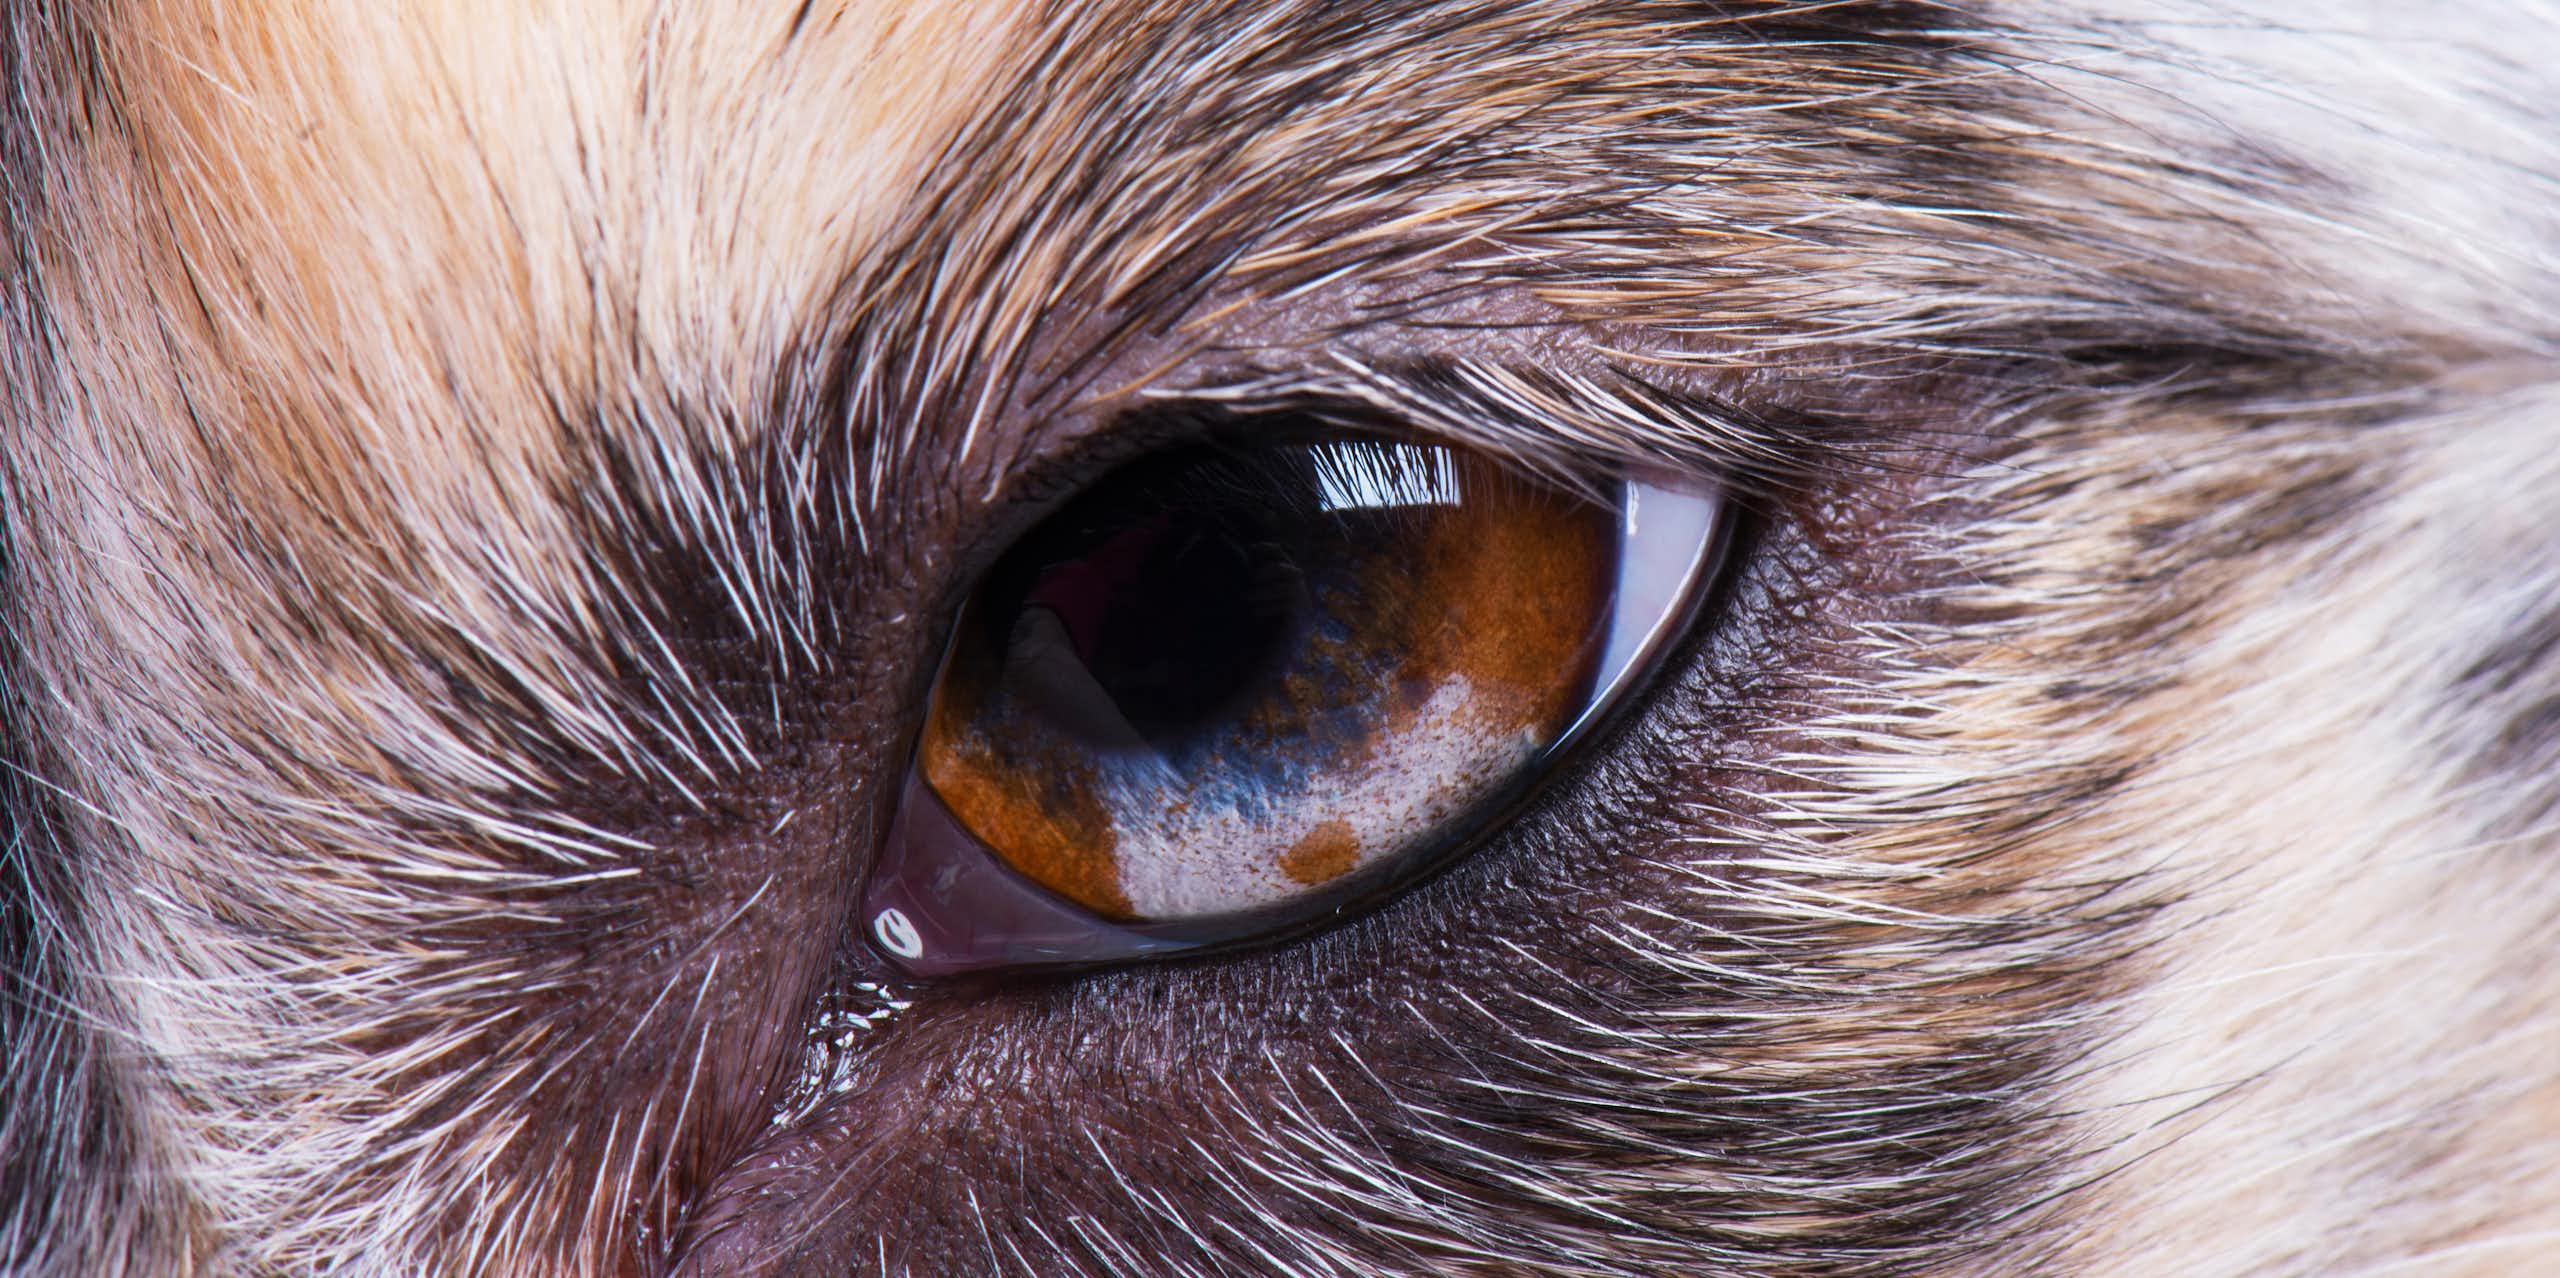 Close up of dog's eye showing white eyelid in corner